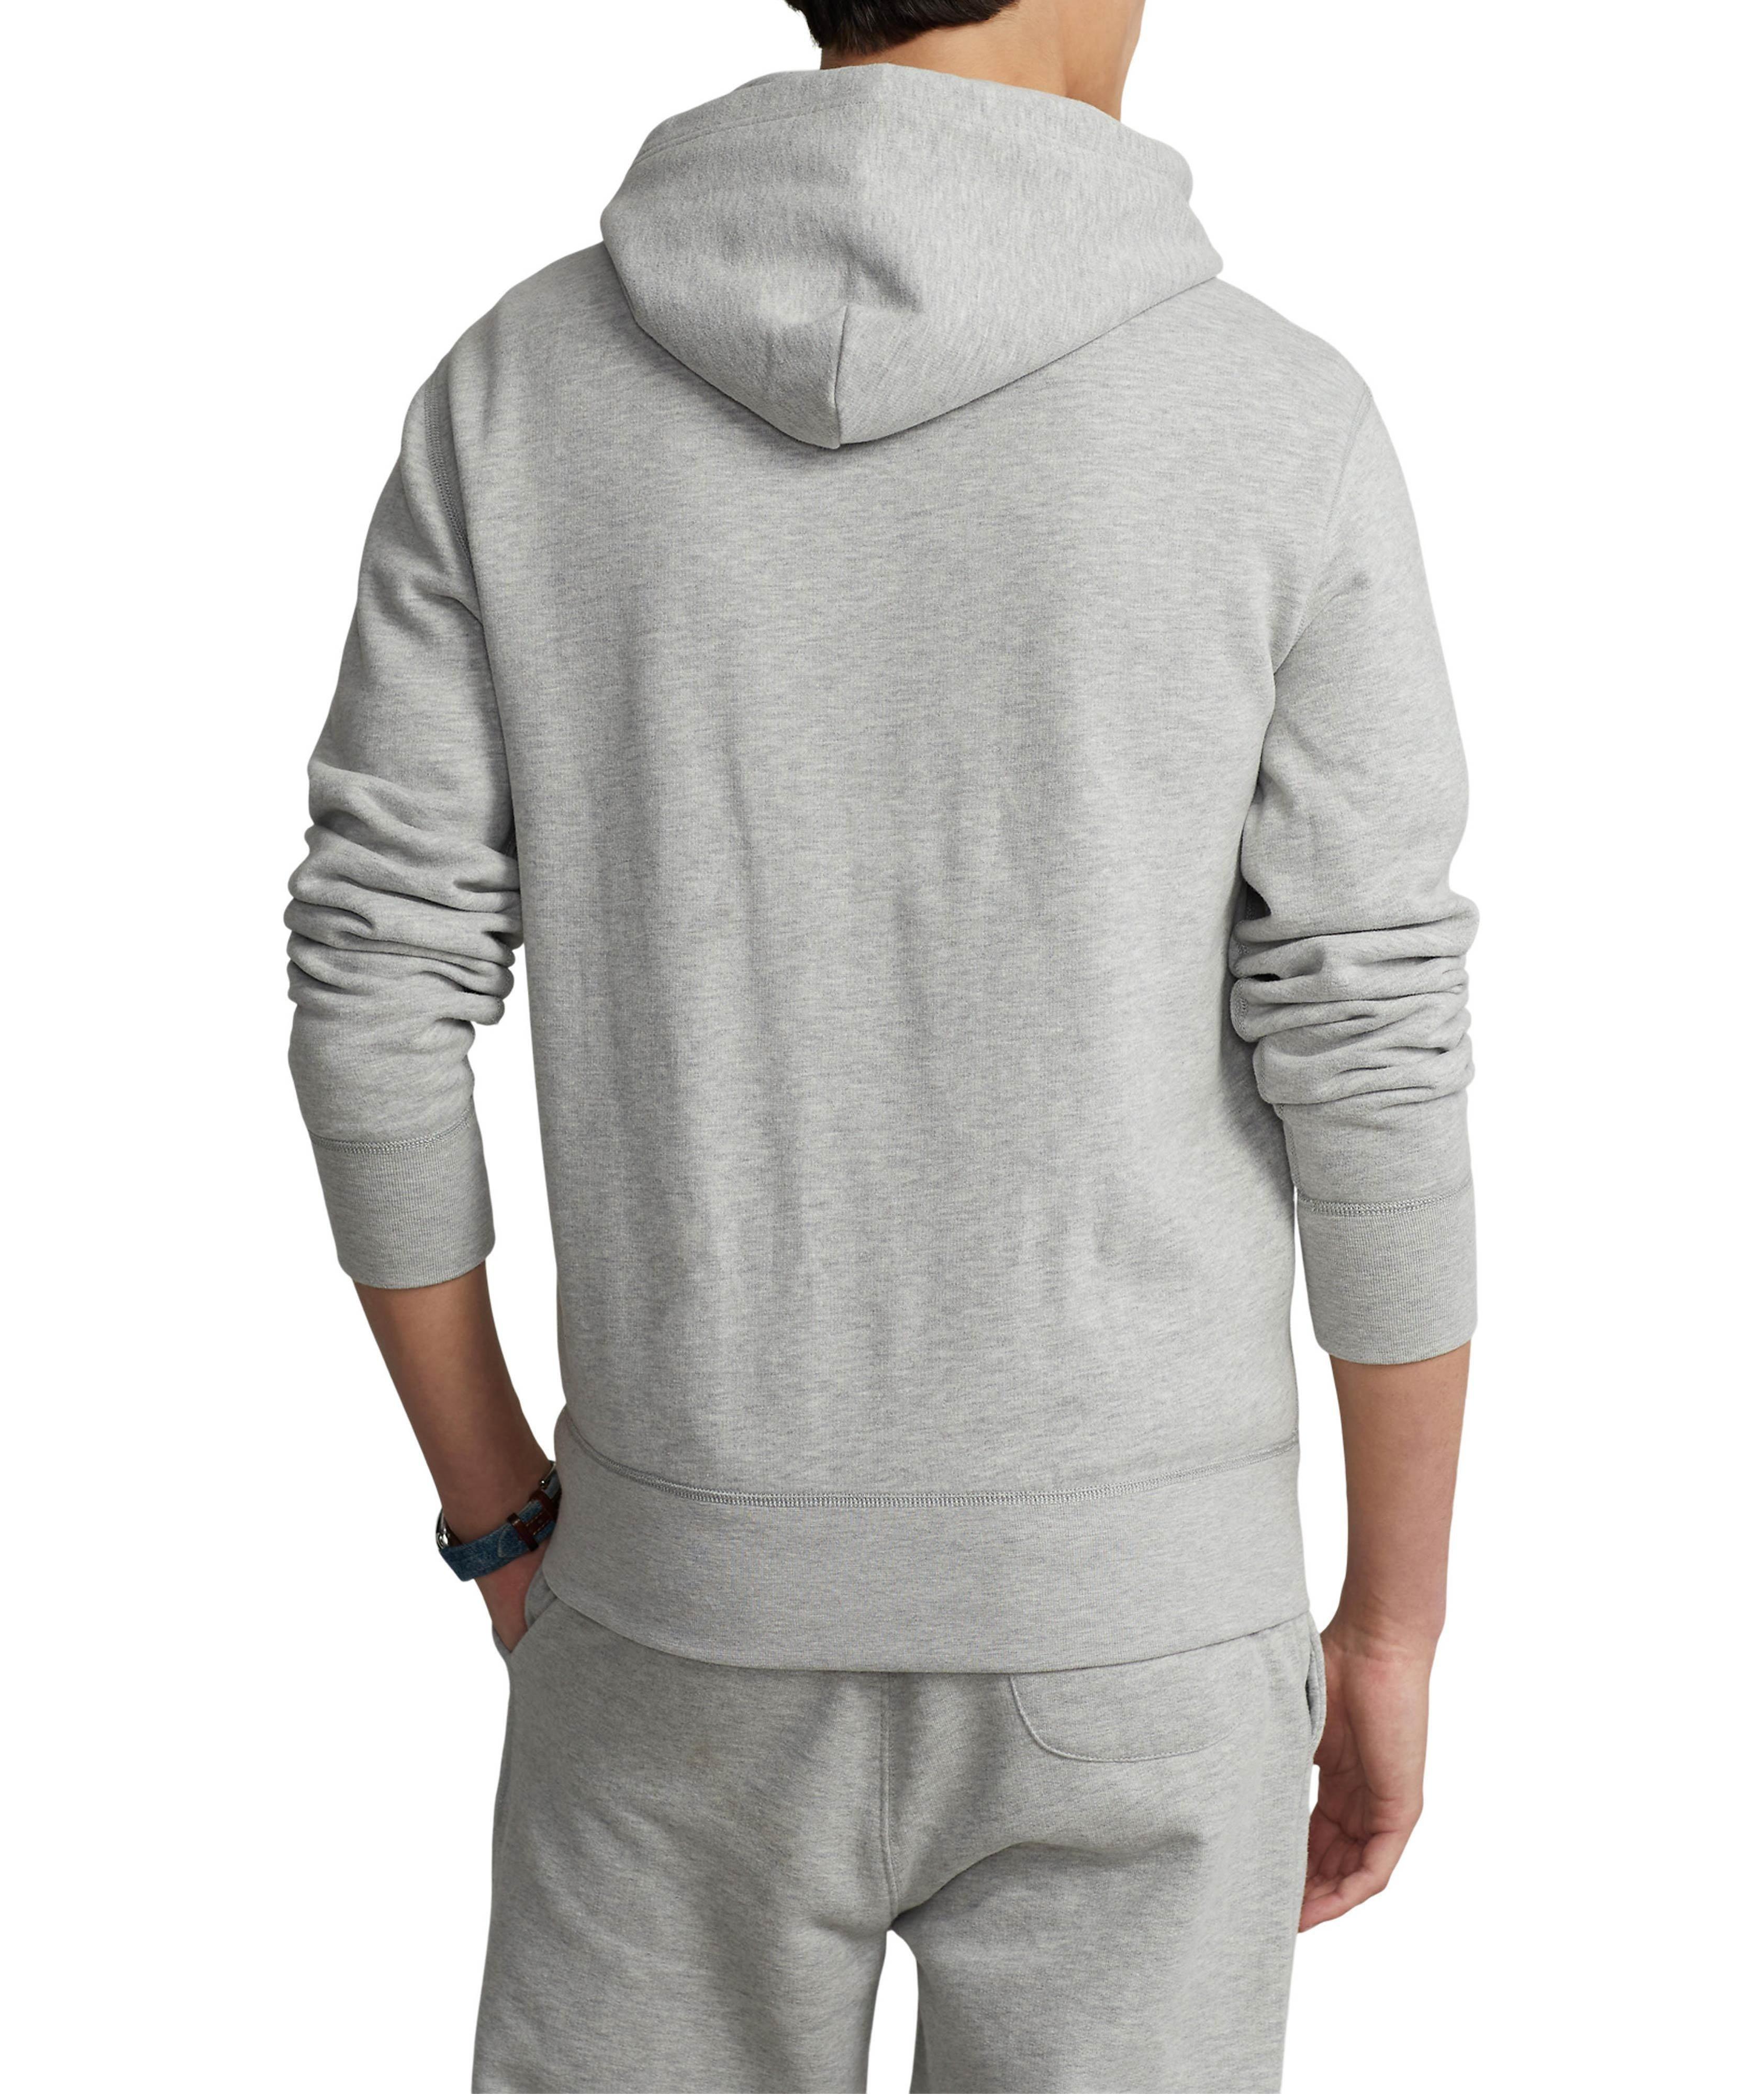  Men's Fashion Hoodies & Sweatshirts - Polo Ralph Lauren / Greys  / Men's Fashion : Clothing, Shoes & Jewelry